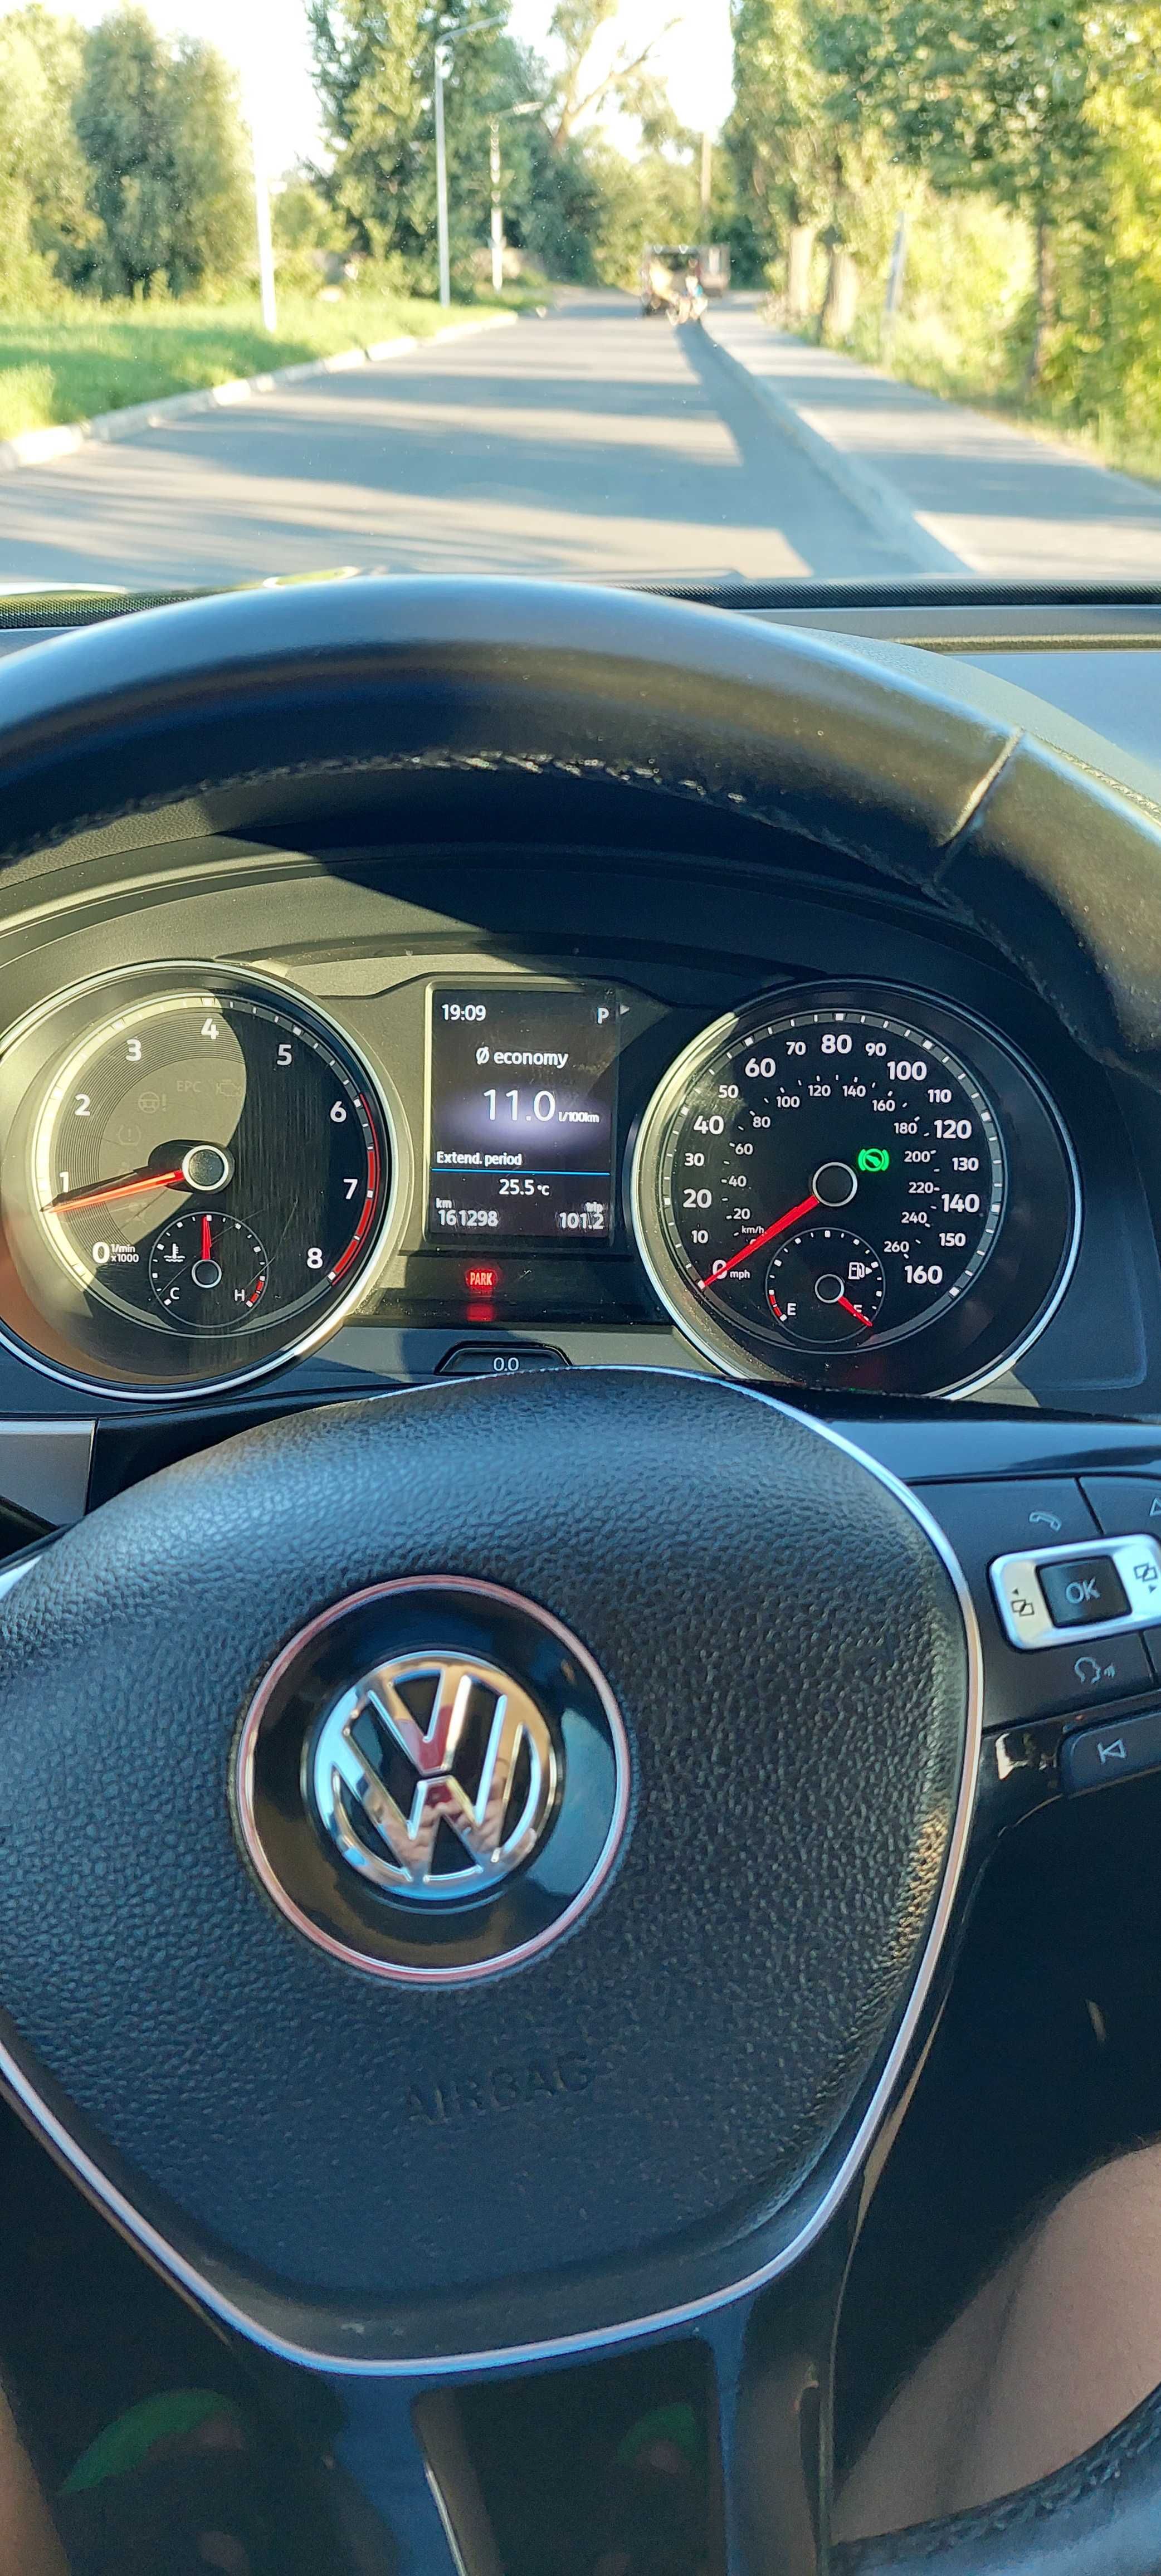 Volkswagen Atlas 2017 3.6L SE